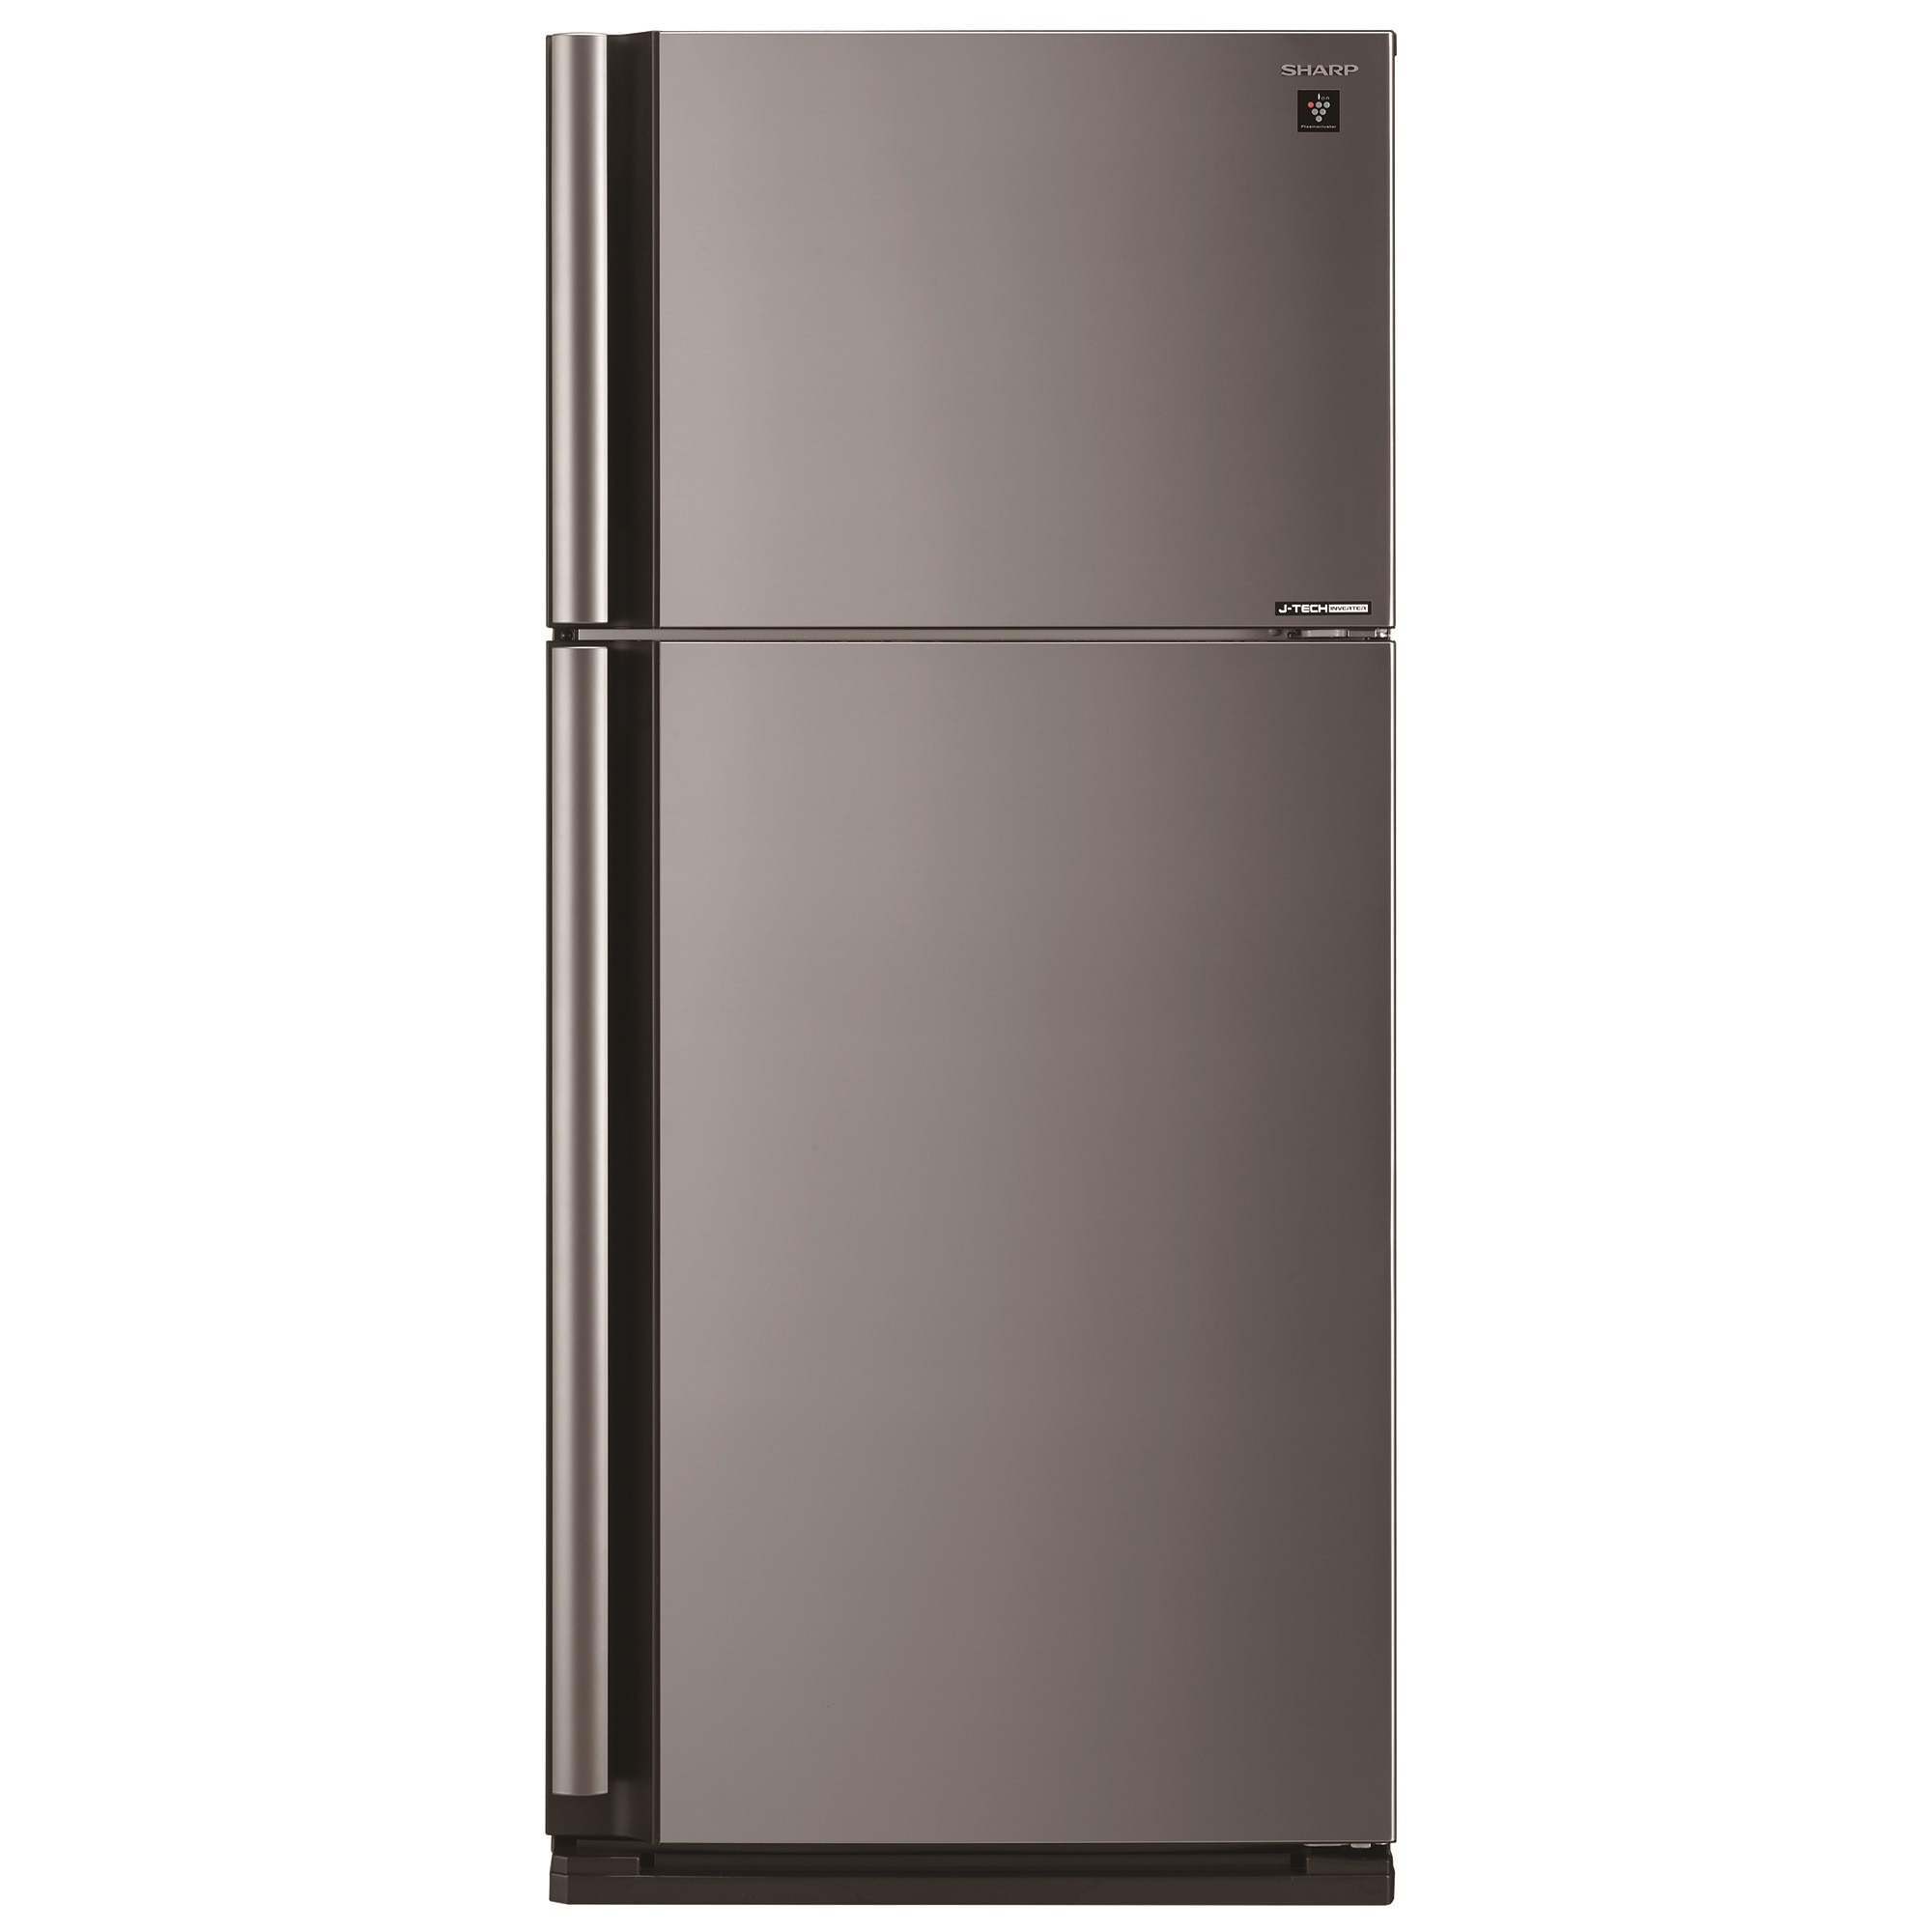 Хладилник Sharp SJXE680MSL с обем от 585 л.